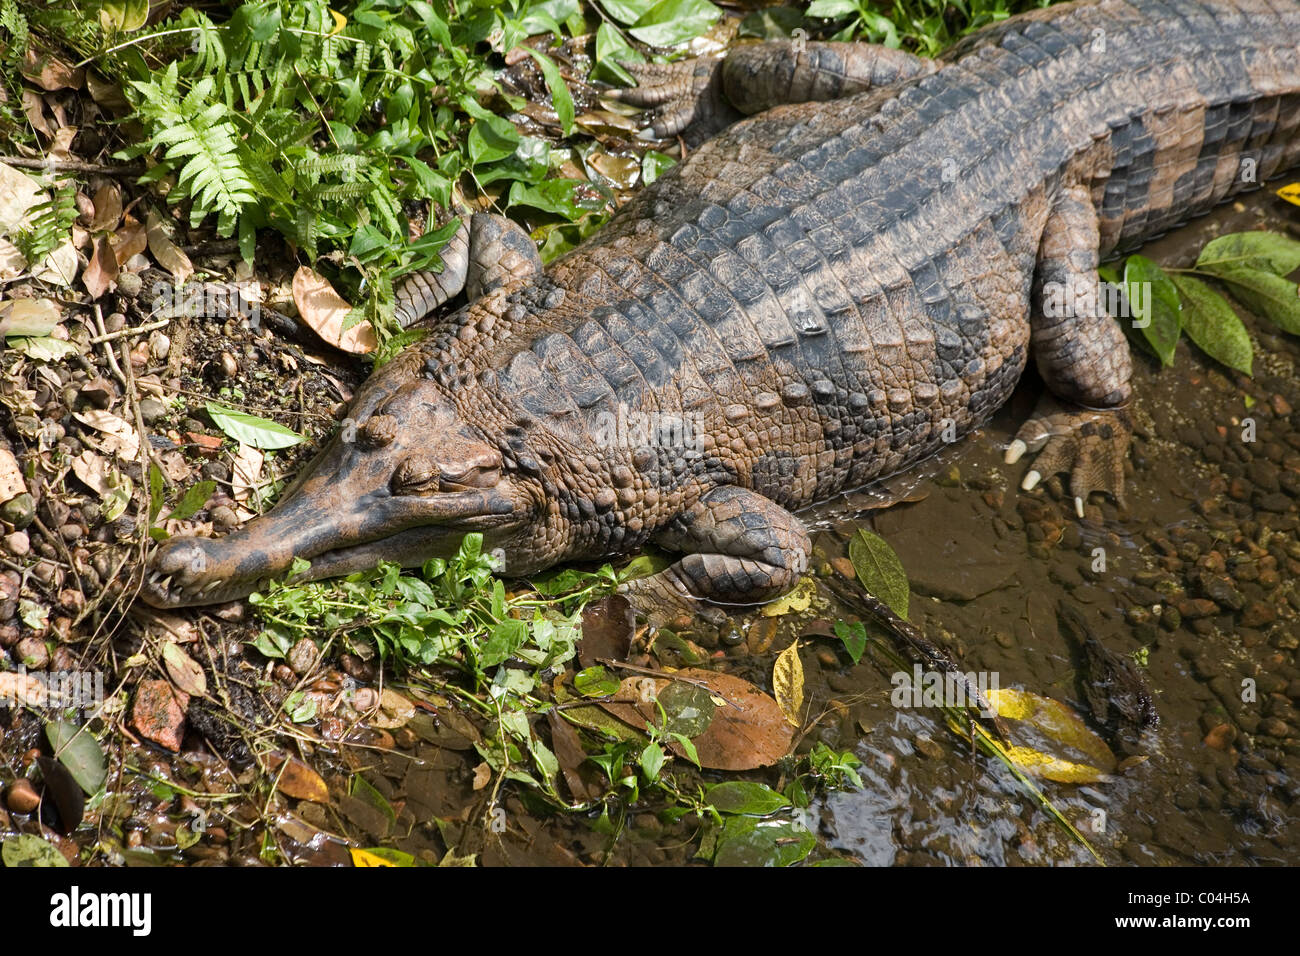 False Gharial, Malayan fresh water crocodile Stock Photo